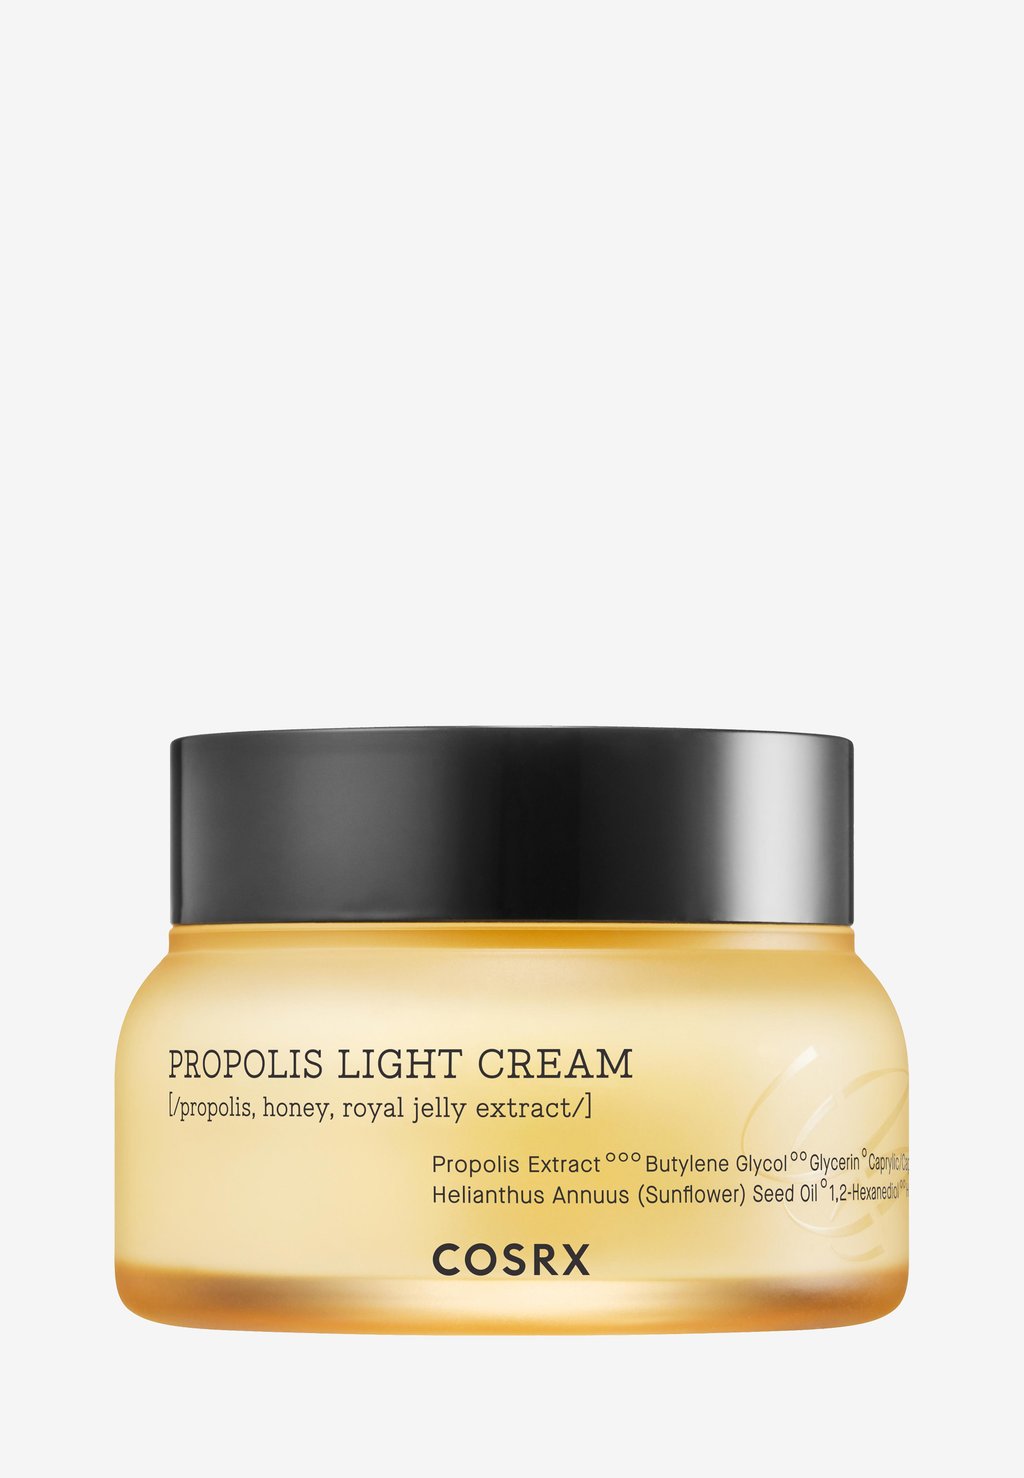 Дневной крем Full Fit Propolis Light Cream COSRX cosrx full fit propolis light ampoule